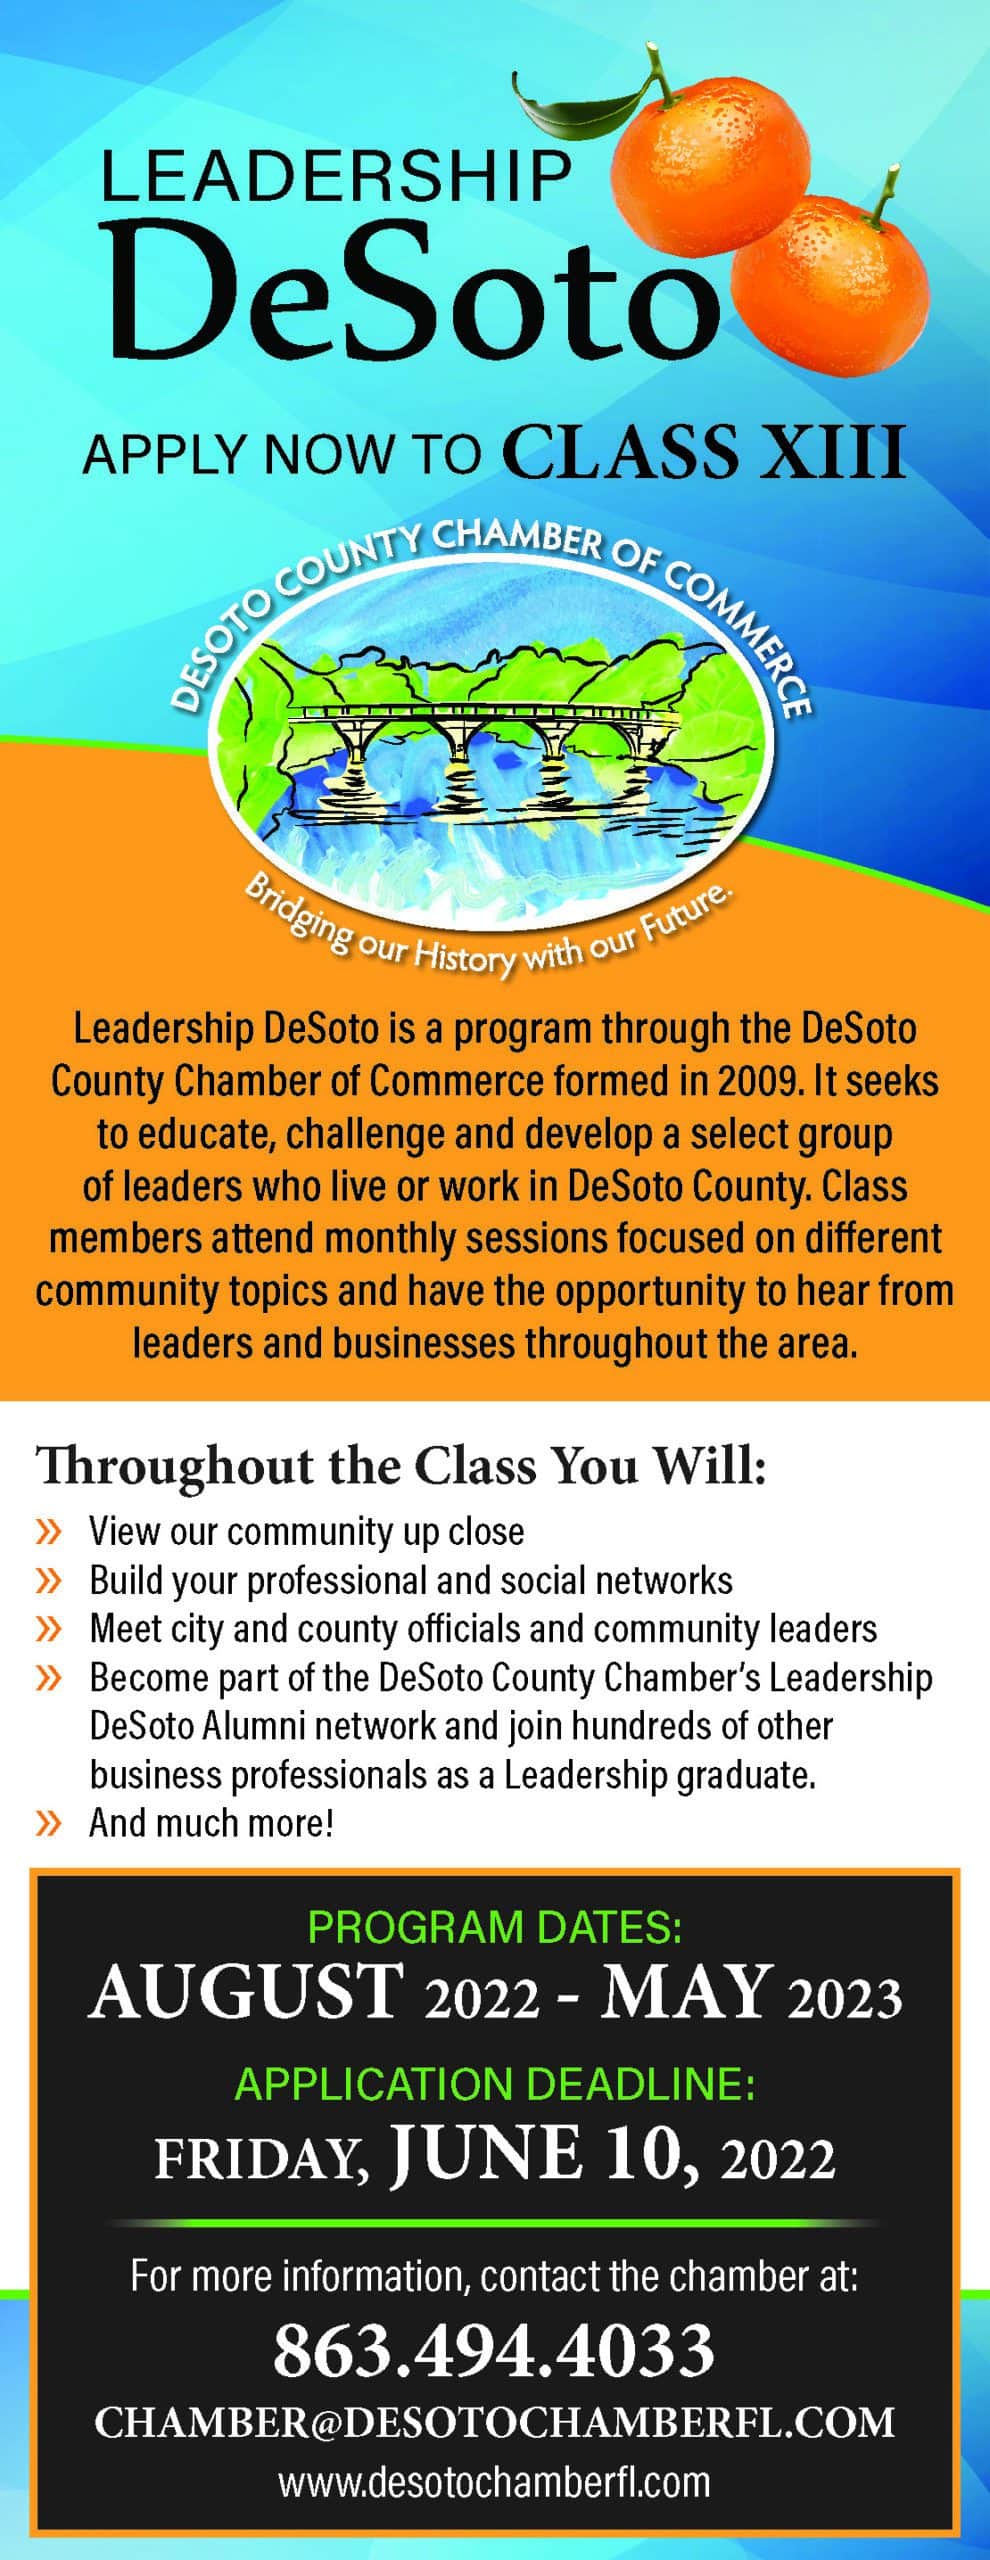 22-0419_Leadership DeSoto_ 2VP_PROOF[72]